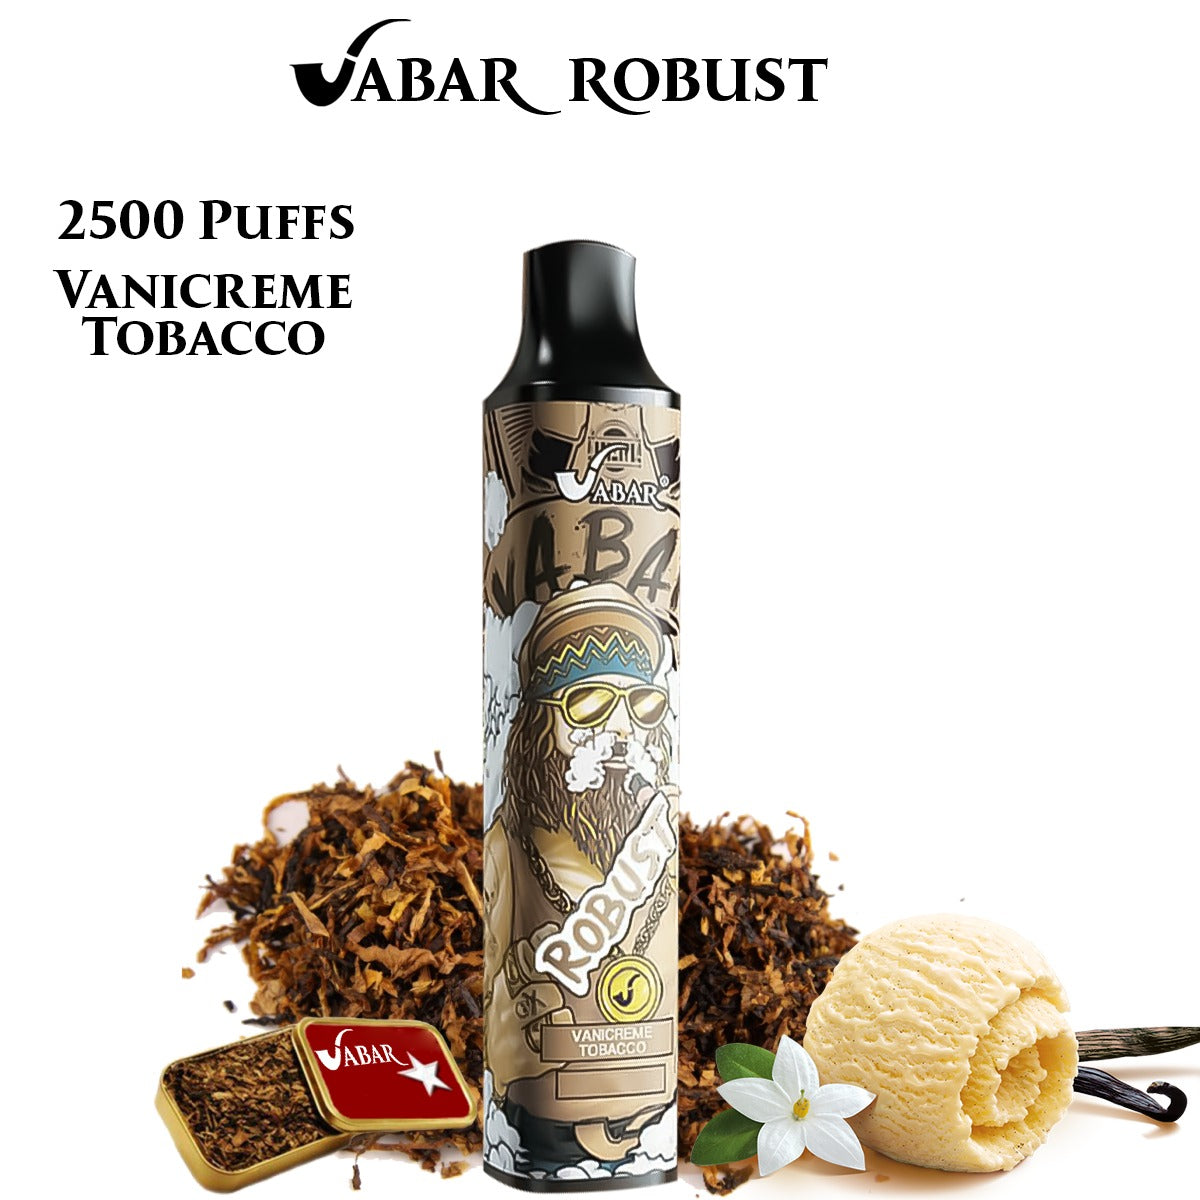 VABAR ROBUST-vanicreme tobacco